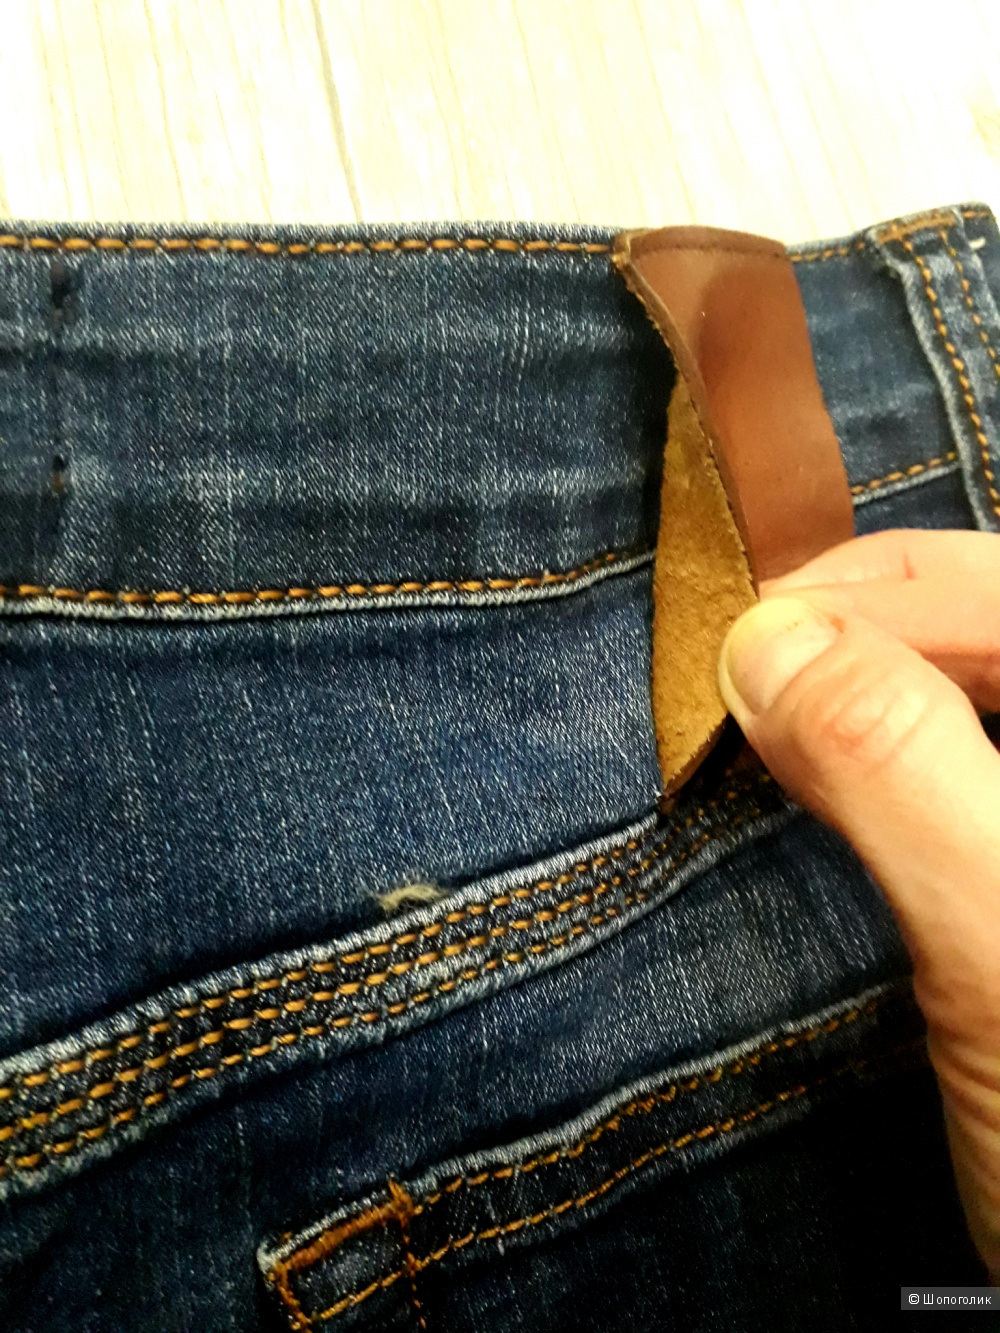 Джинсовая юбка John Galliano размер M (42-44)